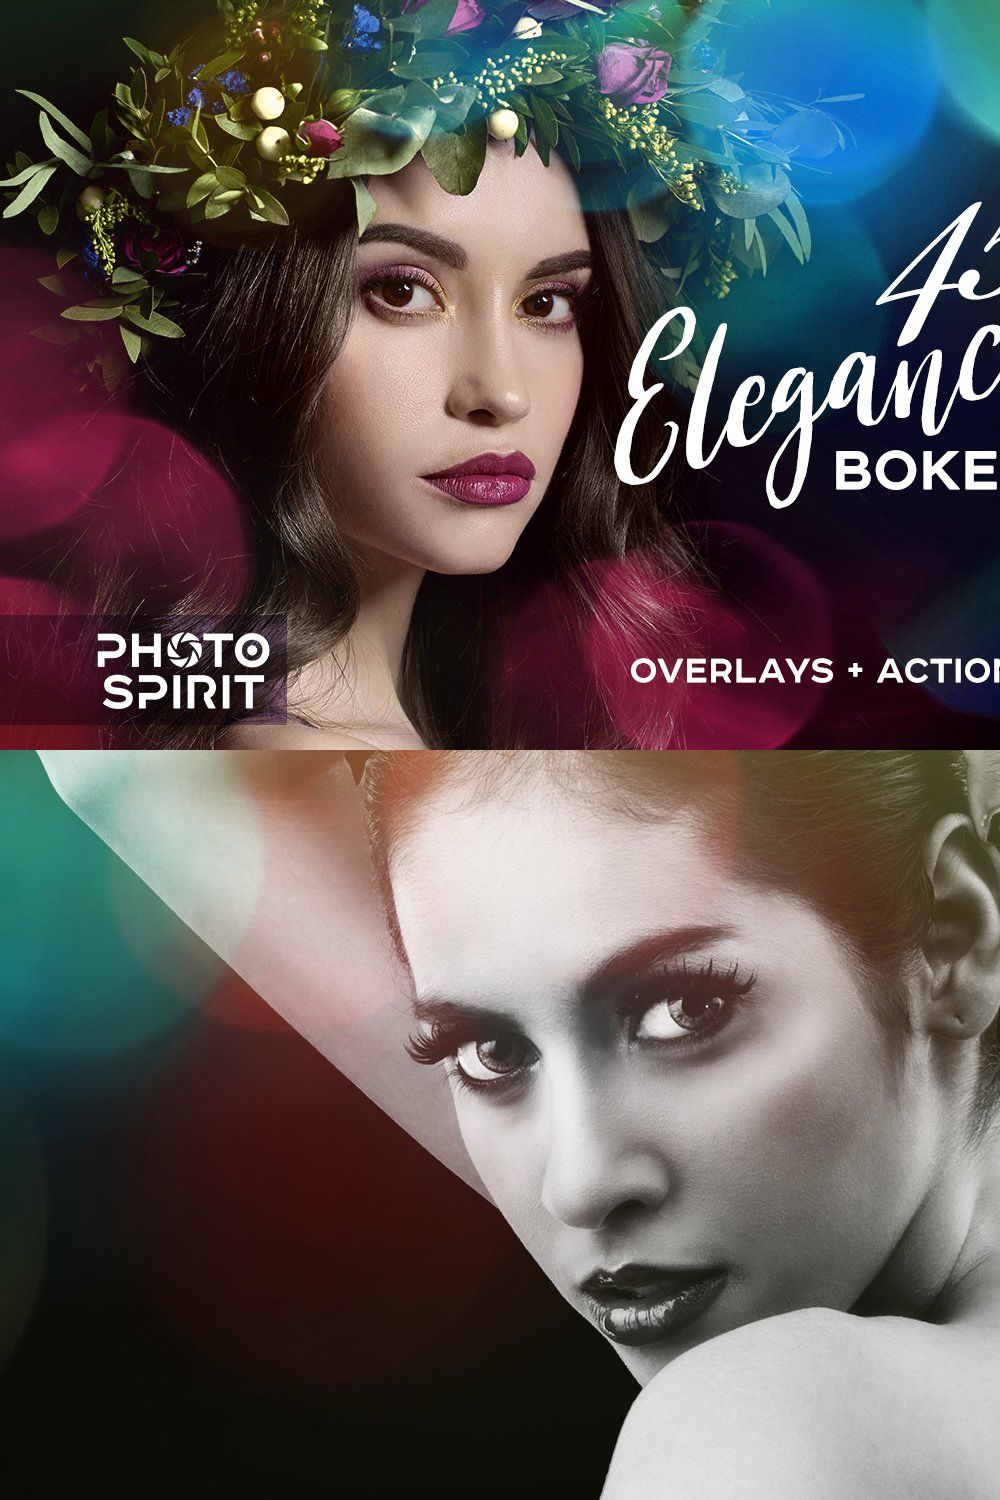 45 Elegance Bokeh Overlays pinterest preview image.